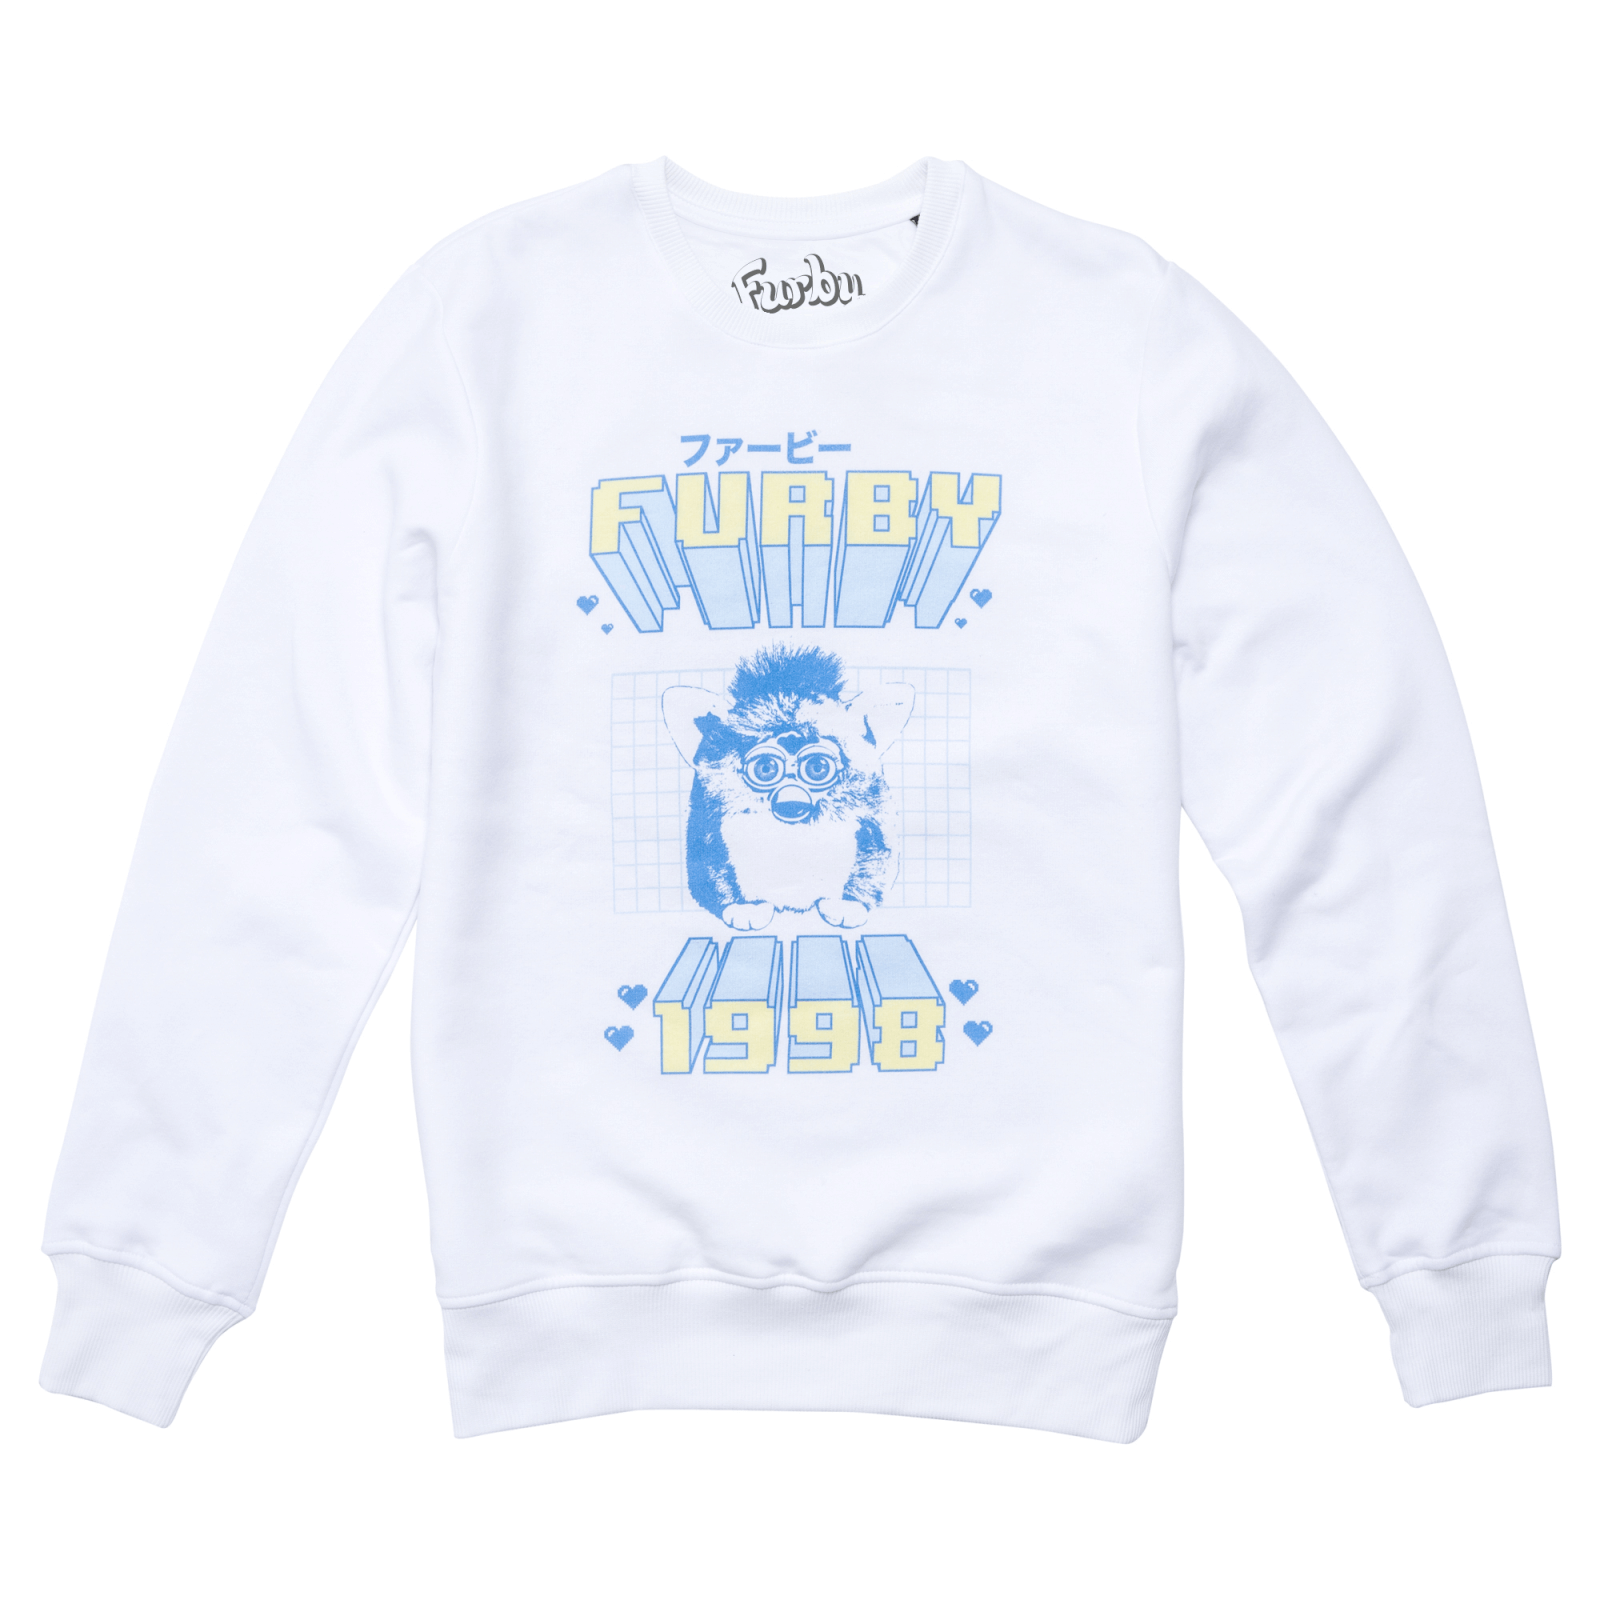 Furby 1998 Sweatshirt - White - S